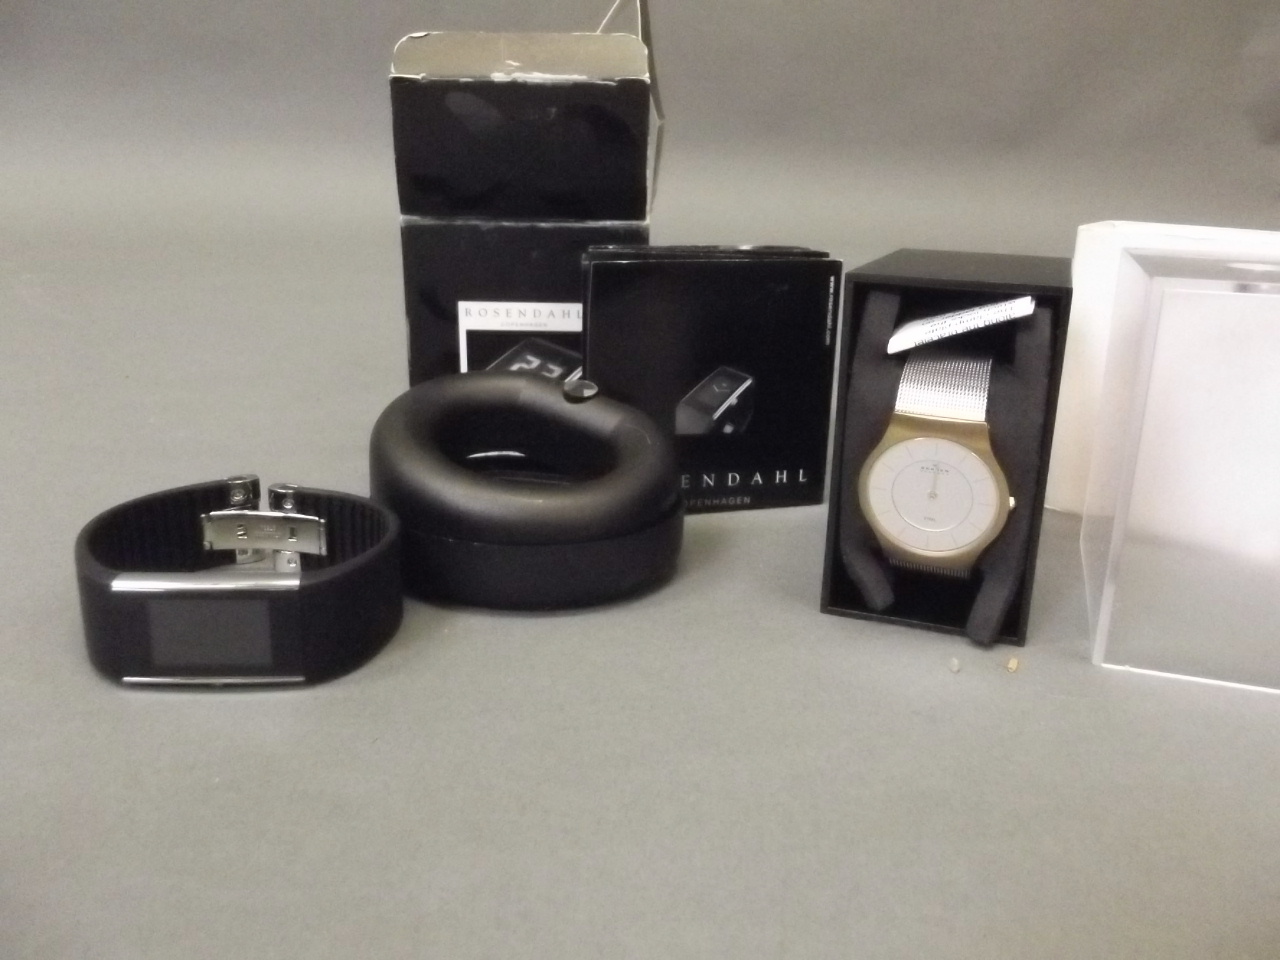 A Rosendahl gentleman's wristwatch designed by Flemming Bo Hansen, in case and box, and a Skagen